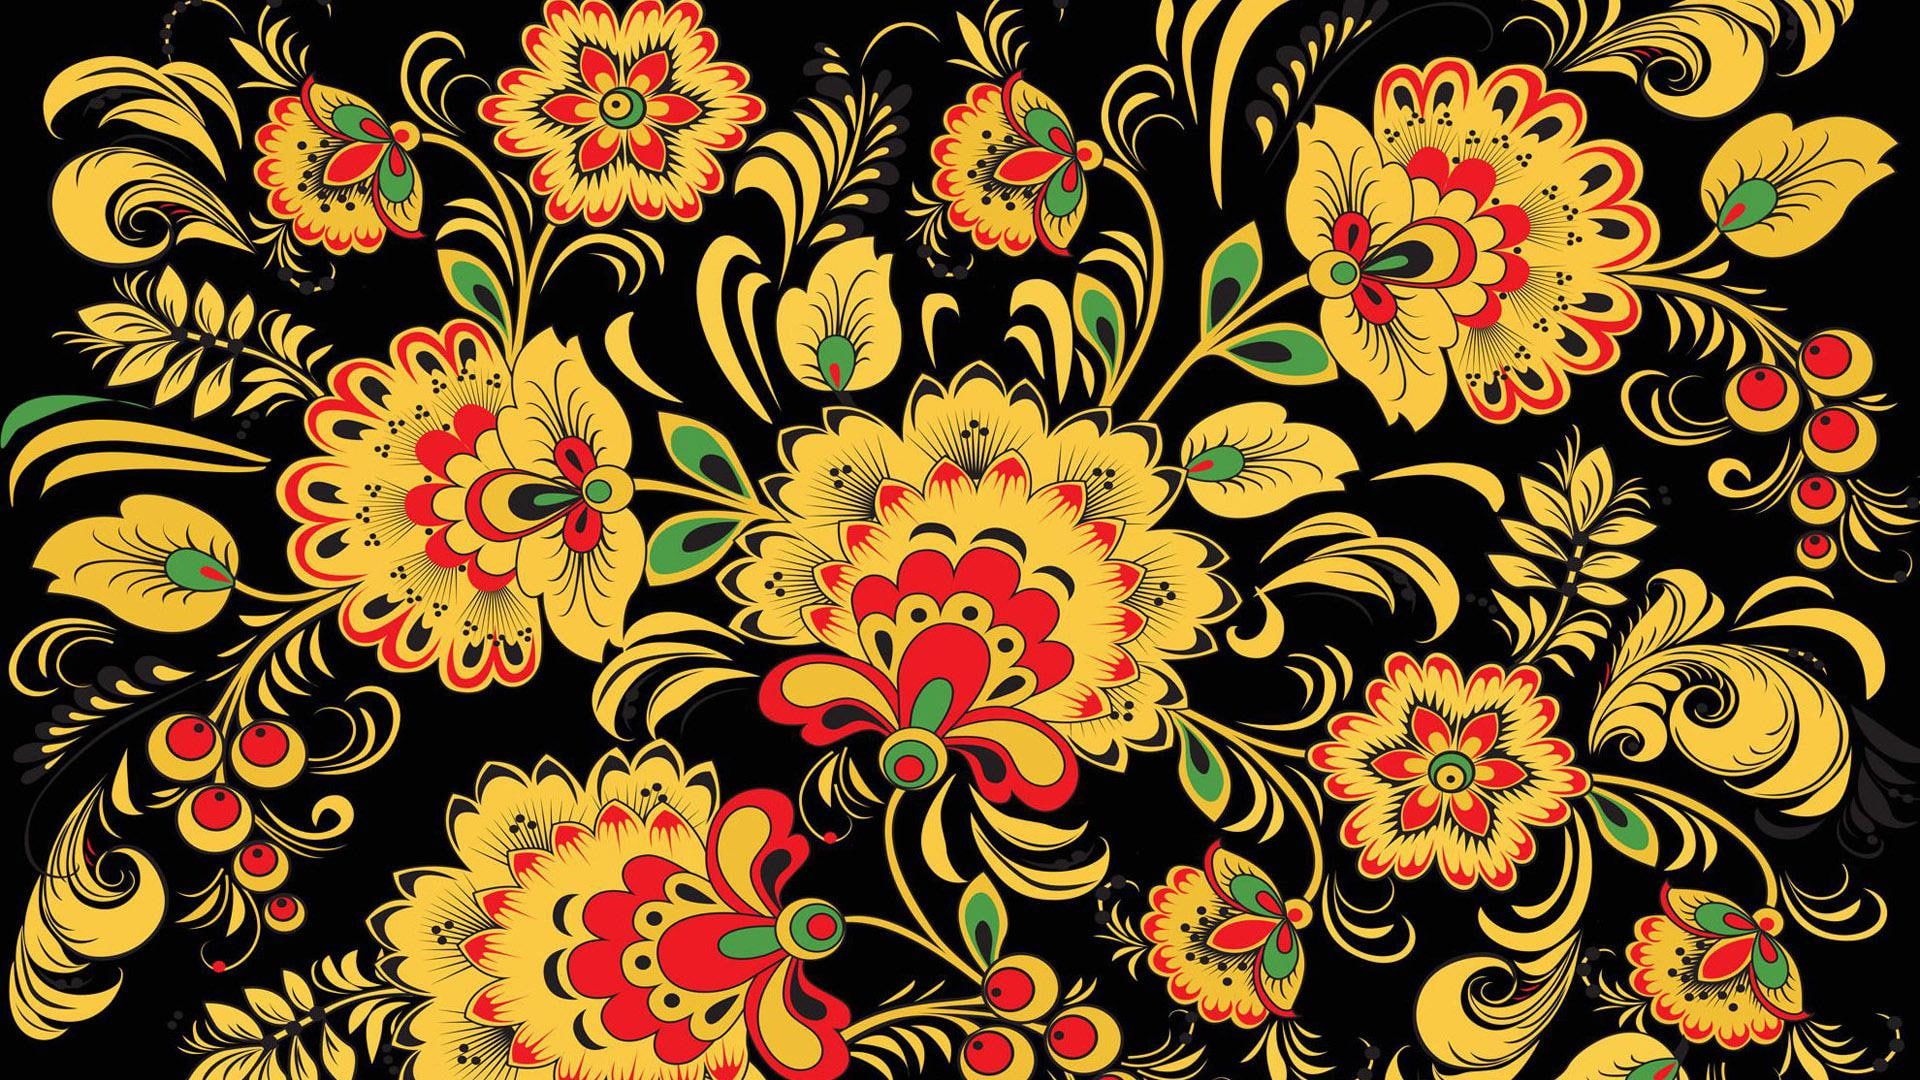 Khokhloma pattern, yellow white and black floral art painting